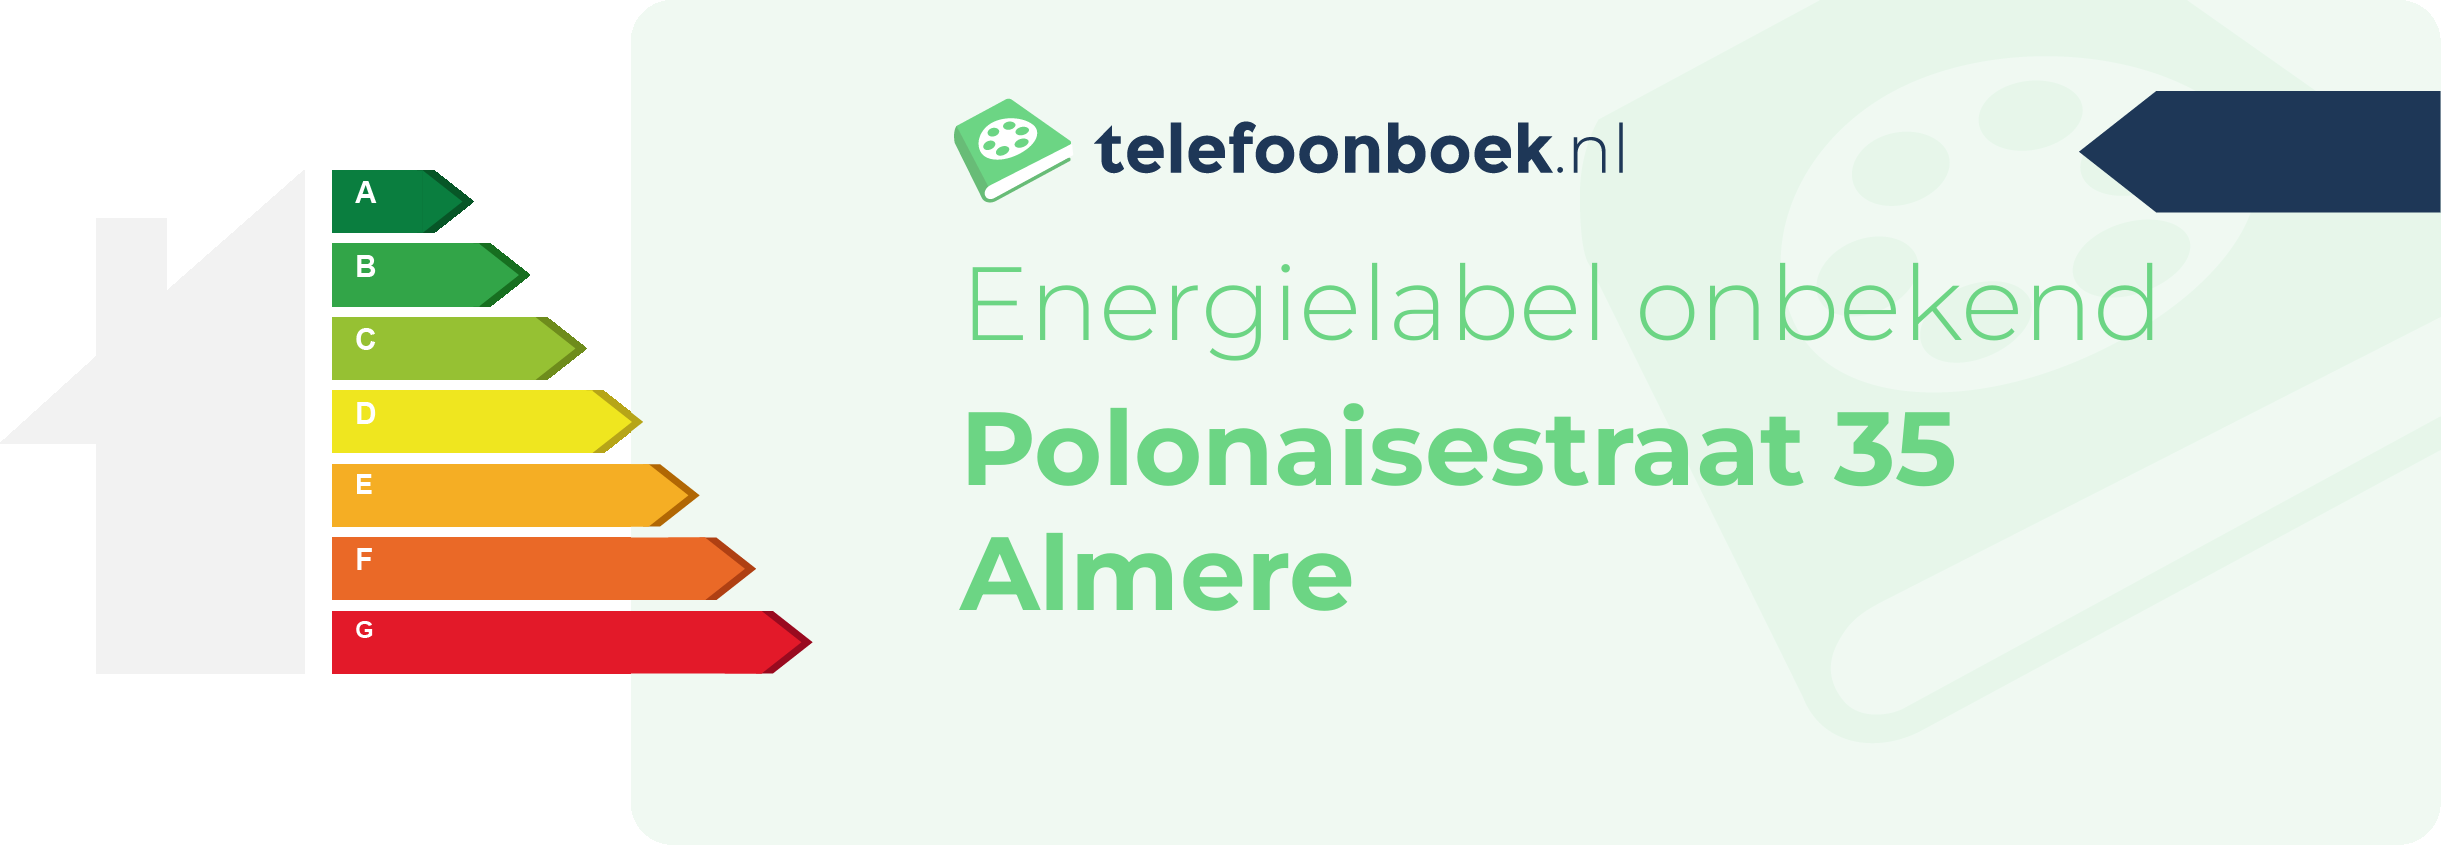 Energielabel Polonaisestraat 35 Almere